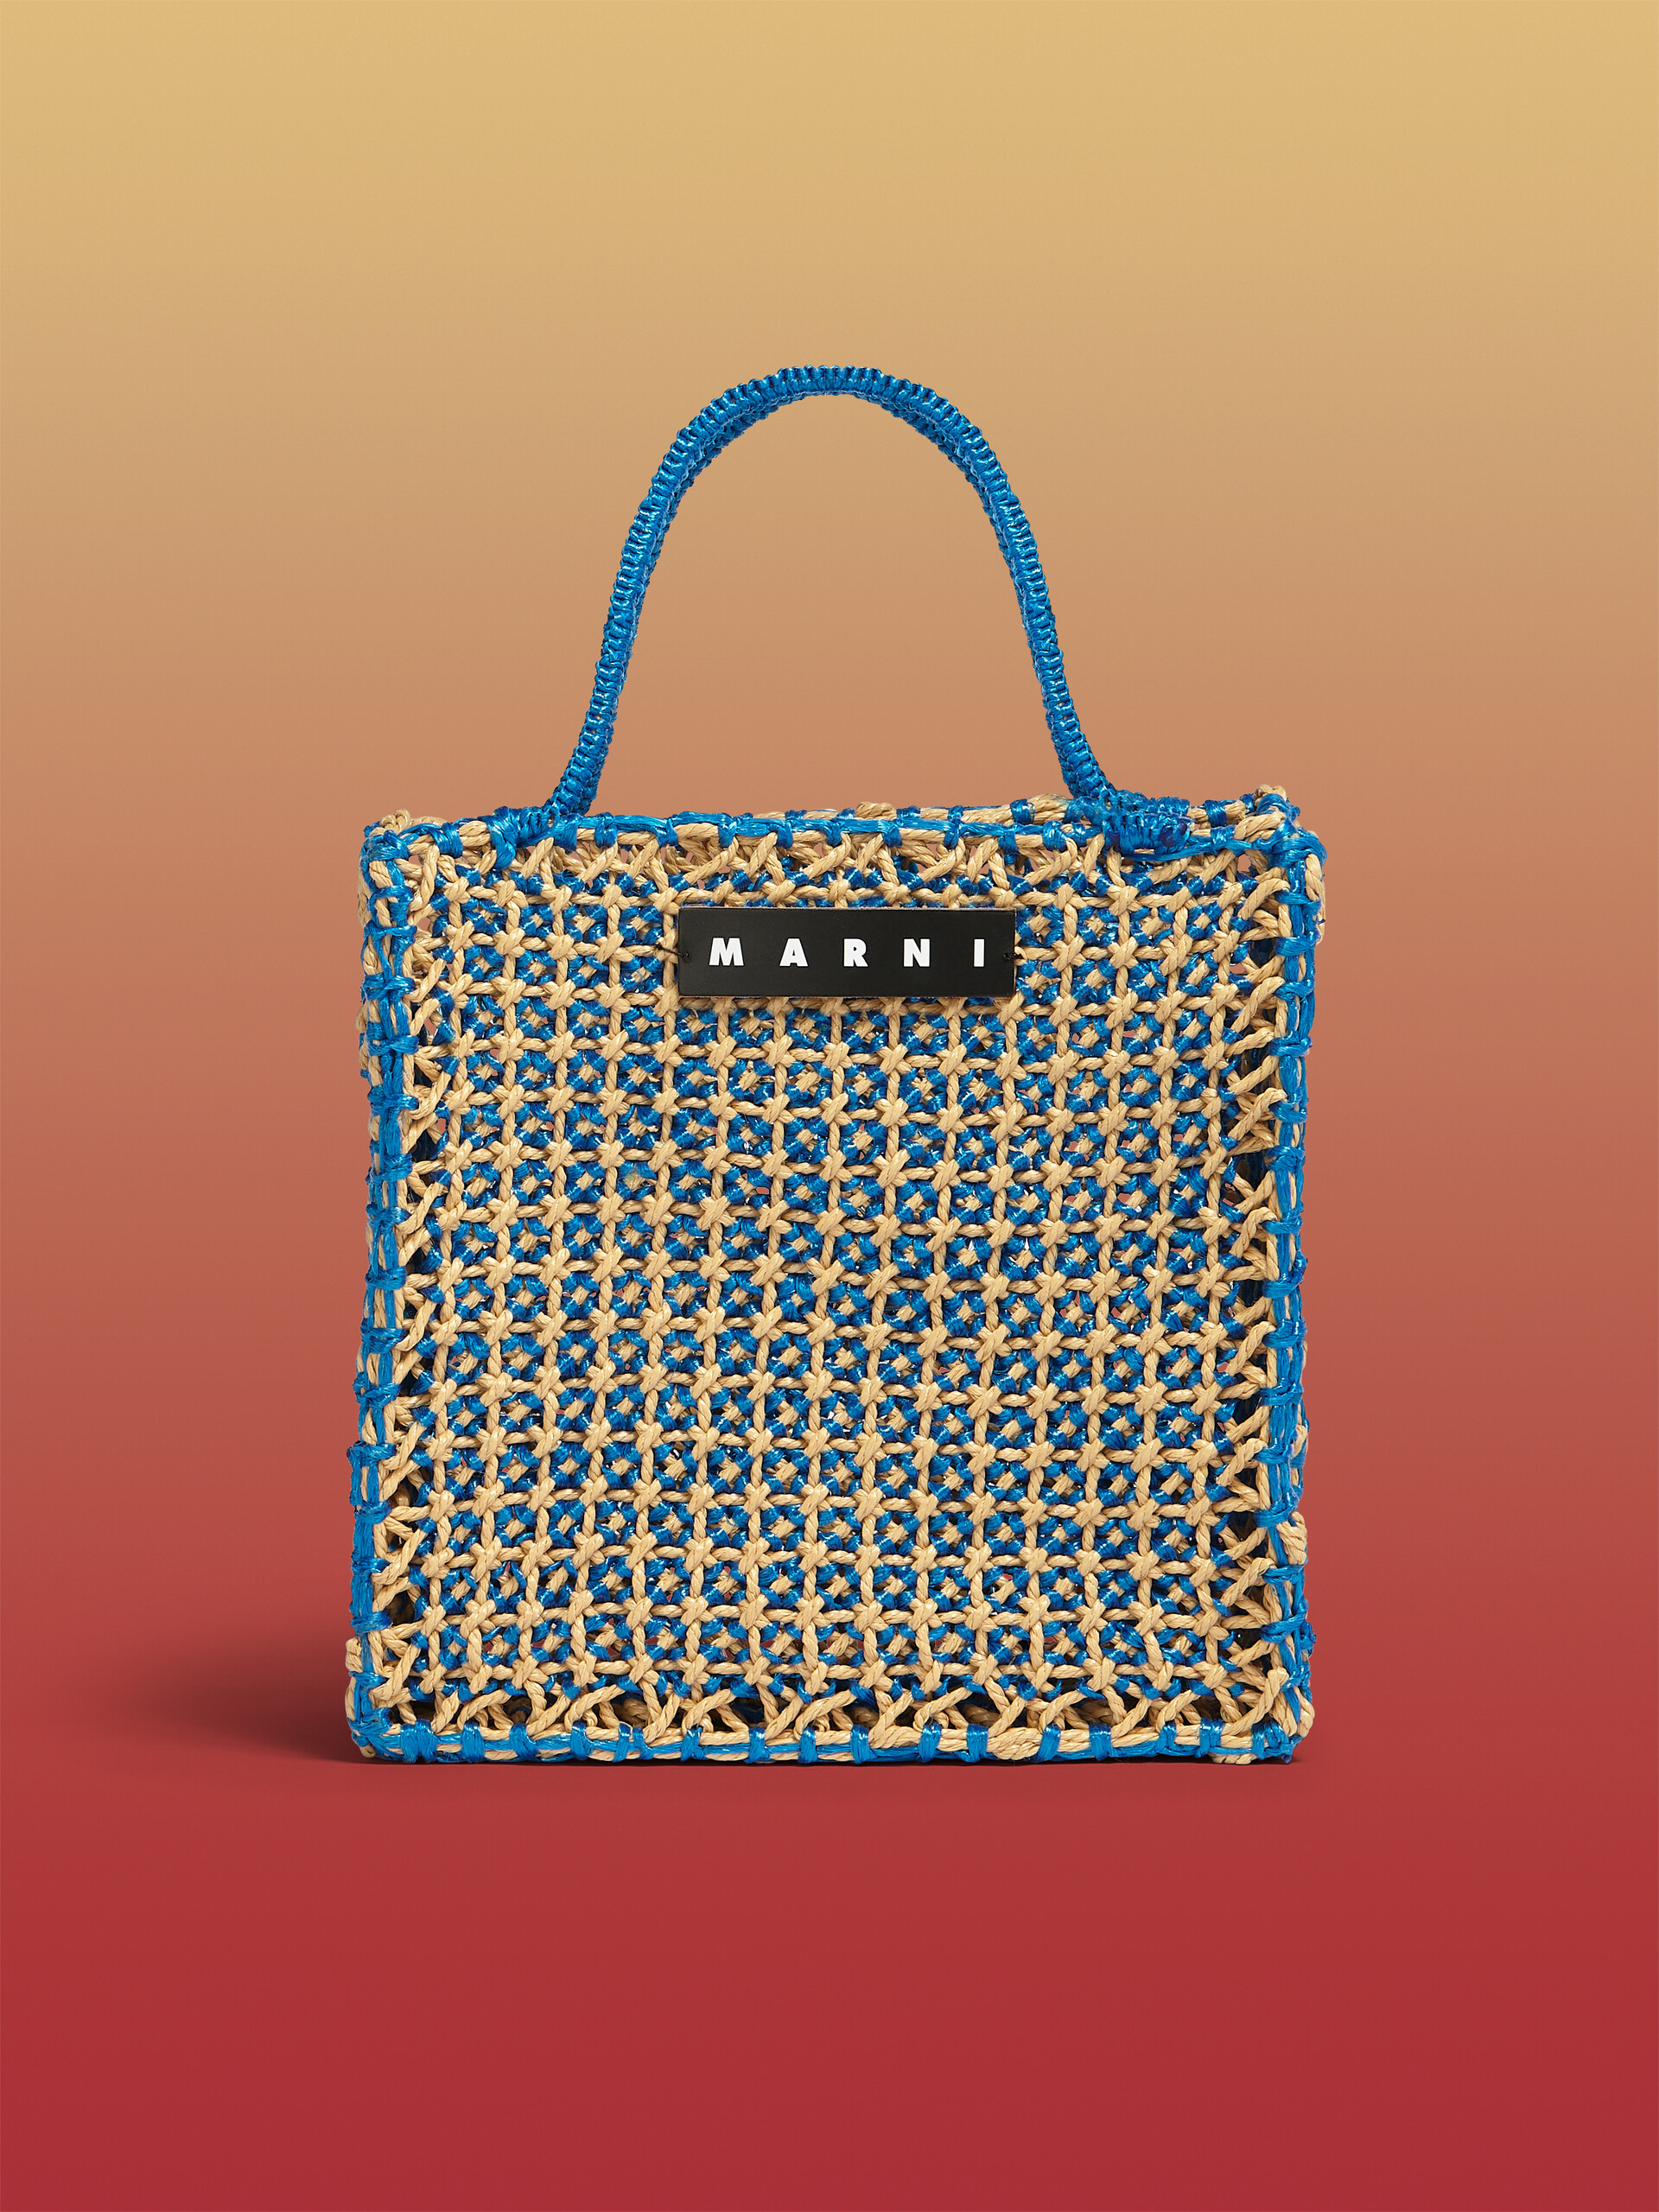 MARNI MARKET MINI JURTA bag in red yellow and green crochet - Shopping Bags - Image 1